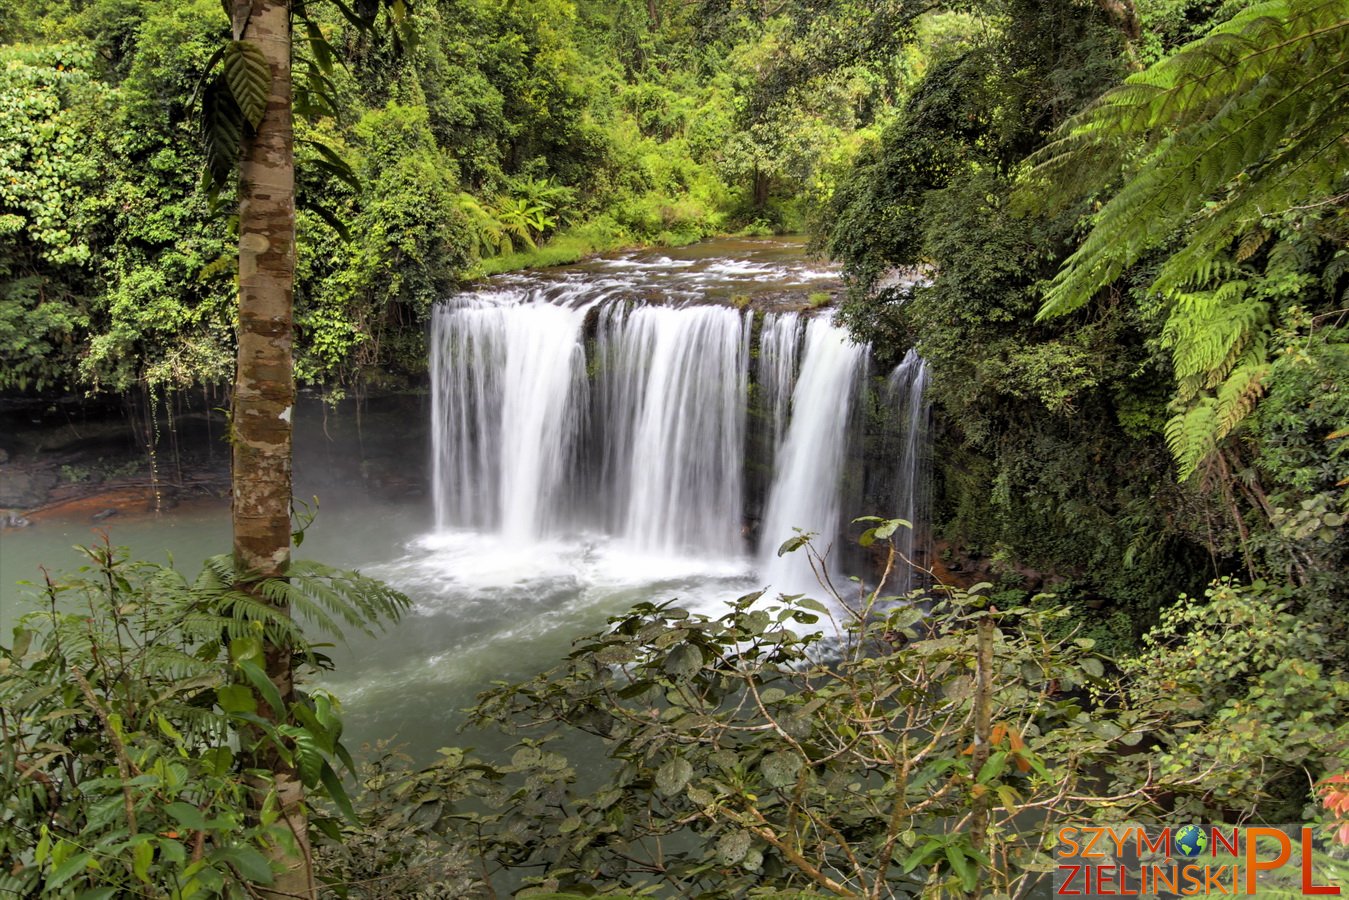 Bolaven Plateau, Laos - Sekong to Pakse - Beautiful waterfalls and coffee plantations